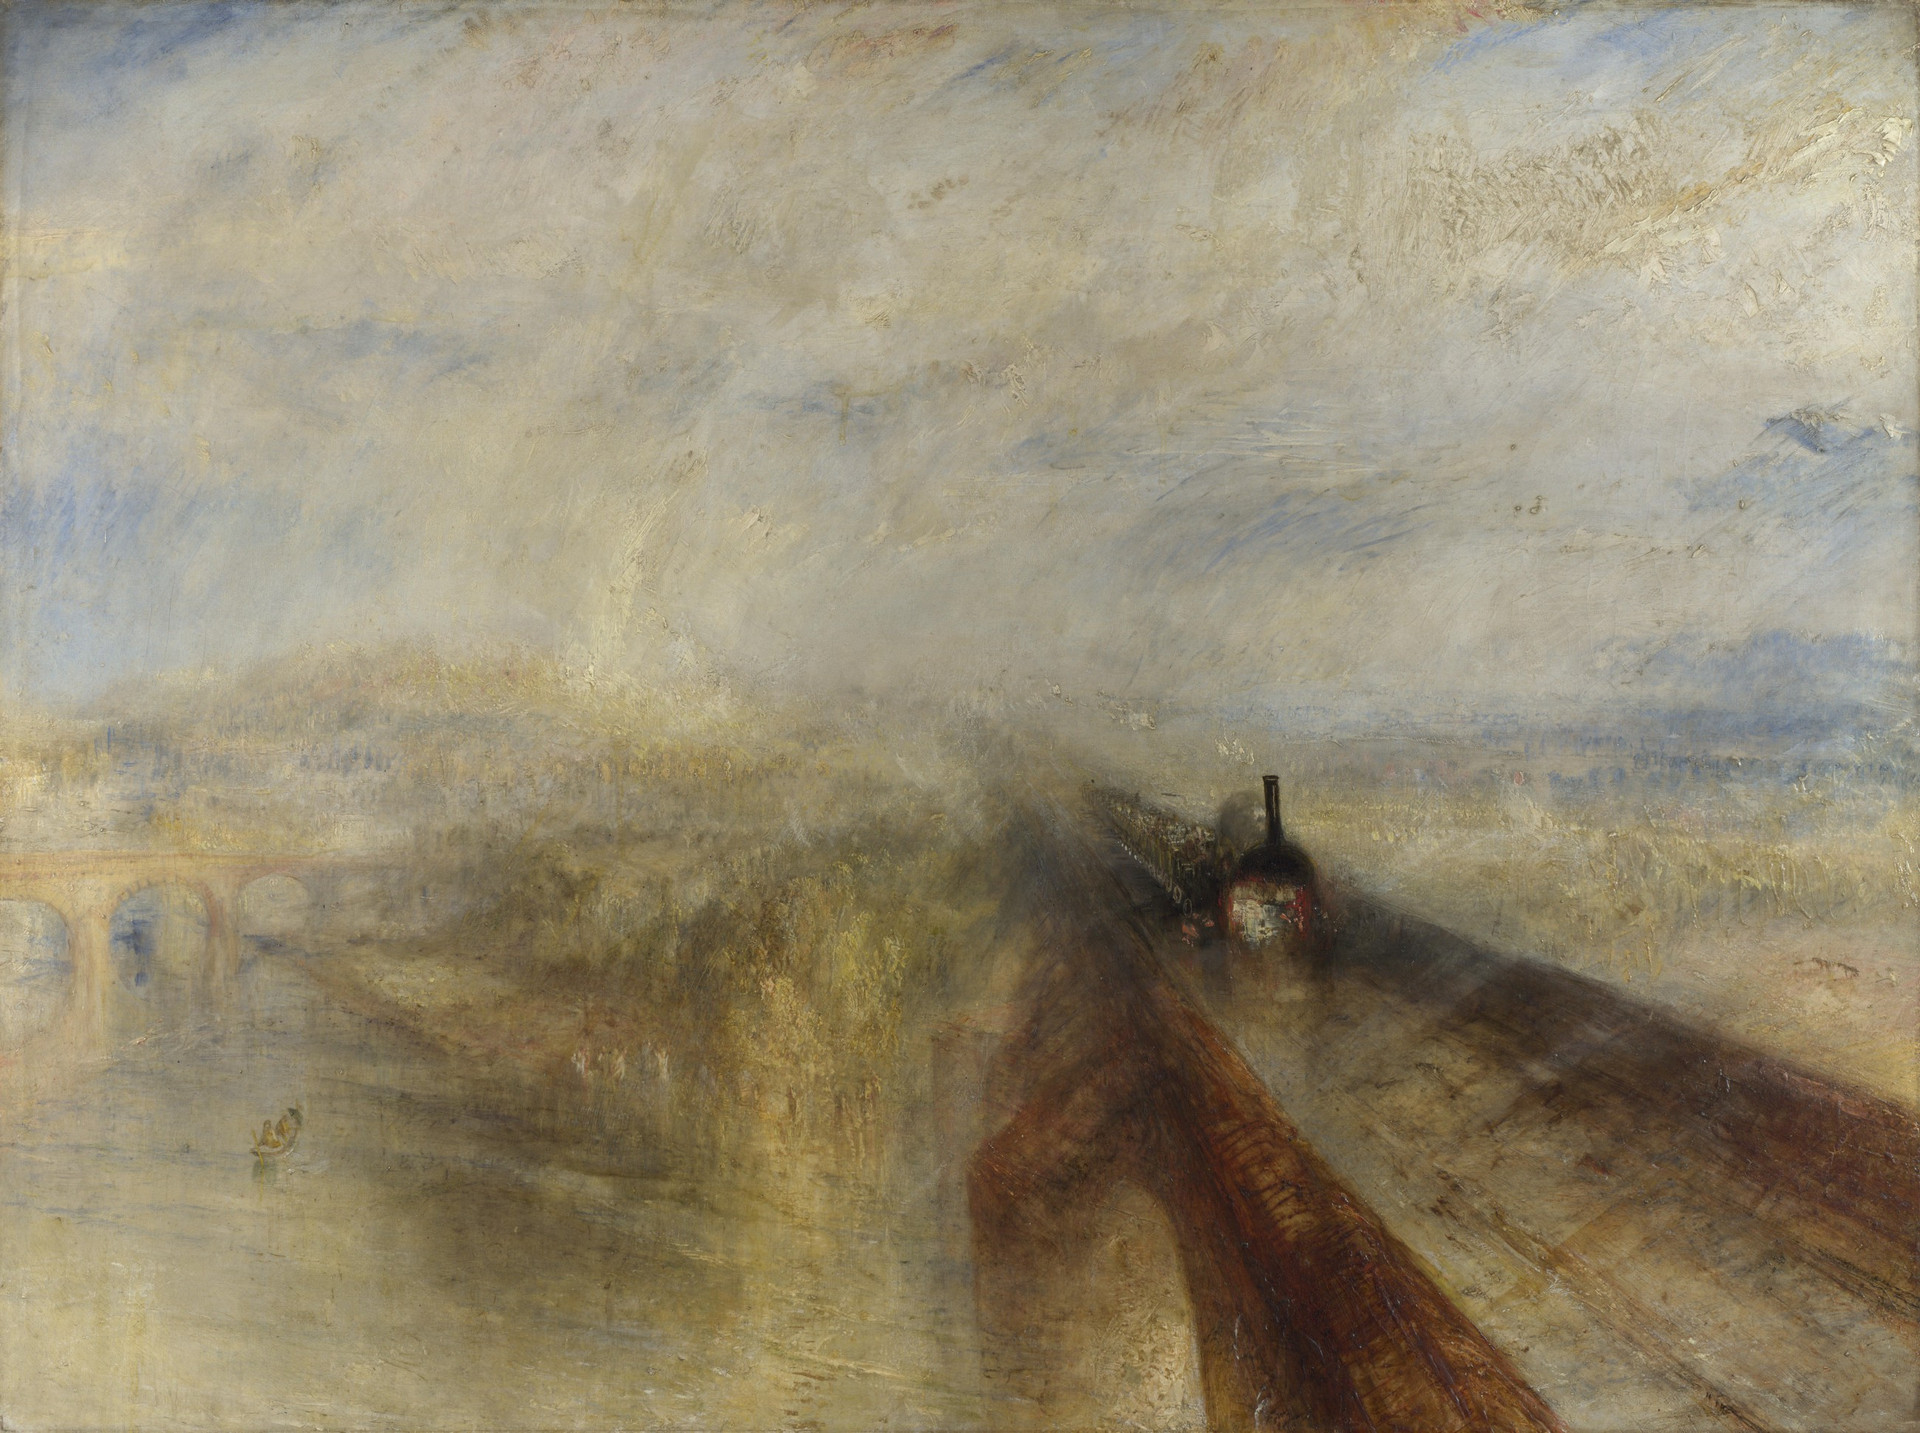 Joseph Mallord William Turner. Rain, Steam and Speed. The Great Western Railway, 1844.